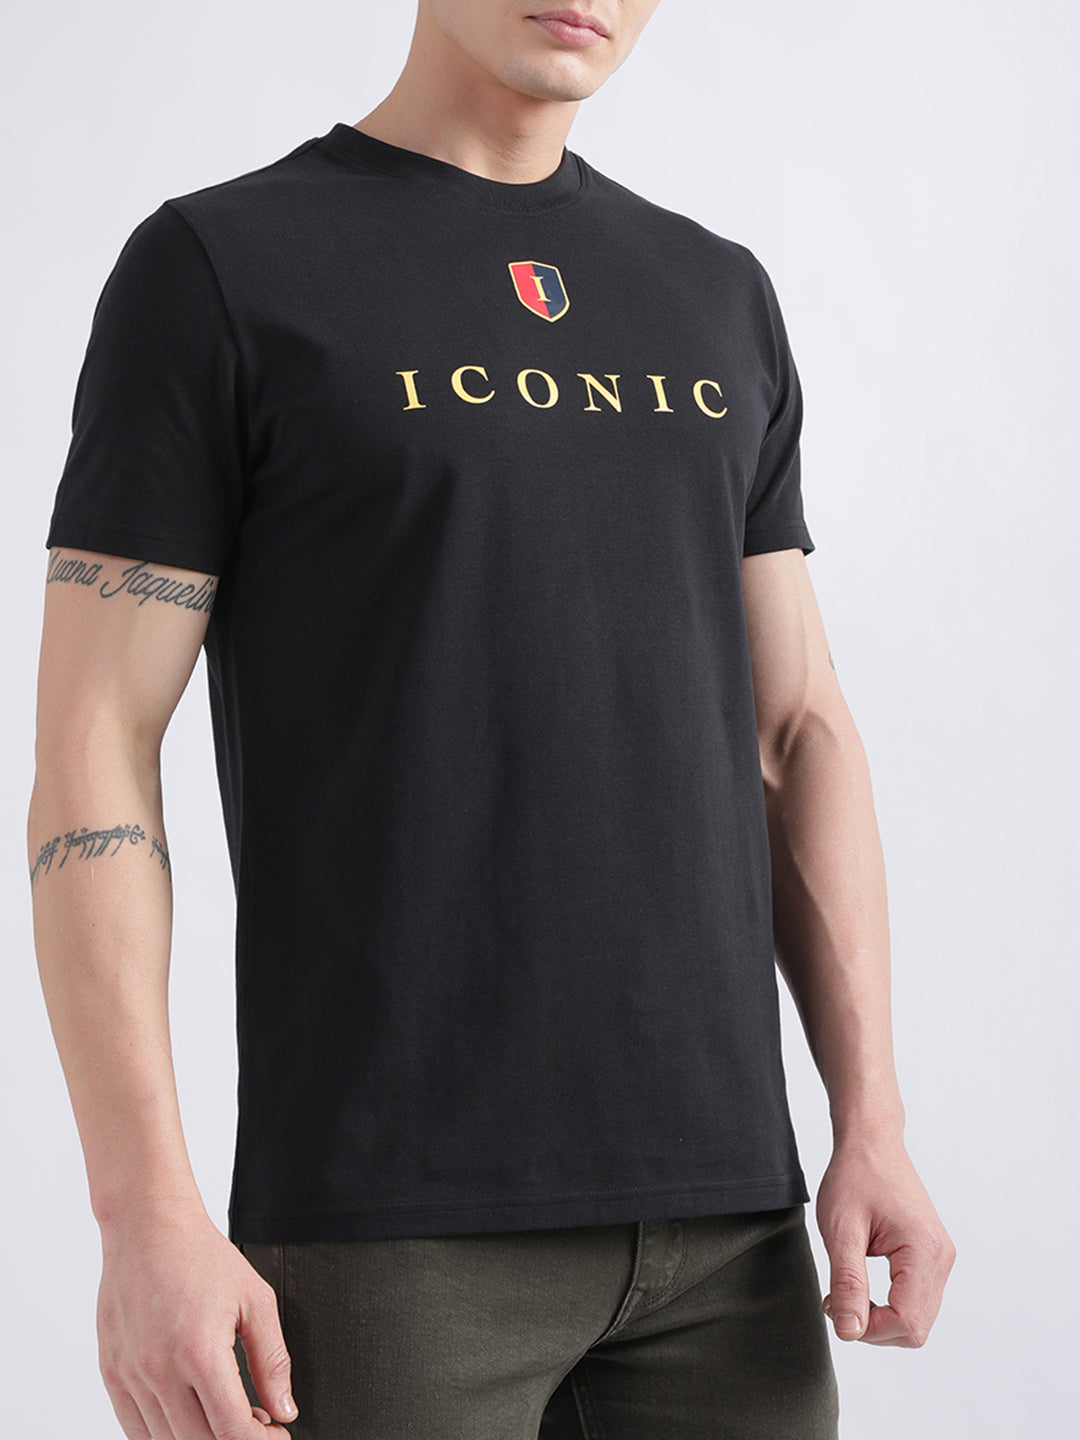 Iconic Men Black Solid Round Neck TShirt